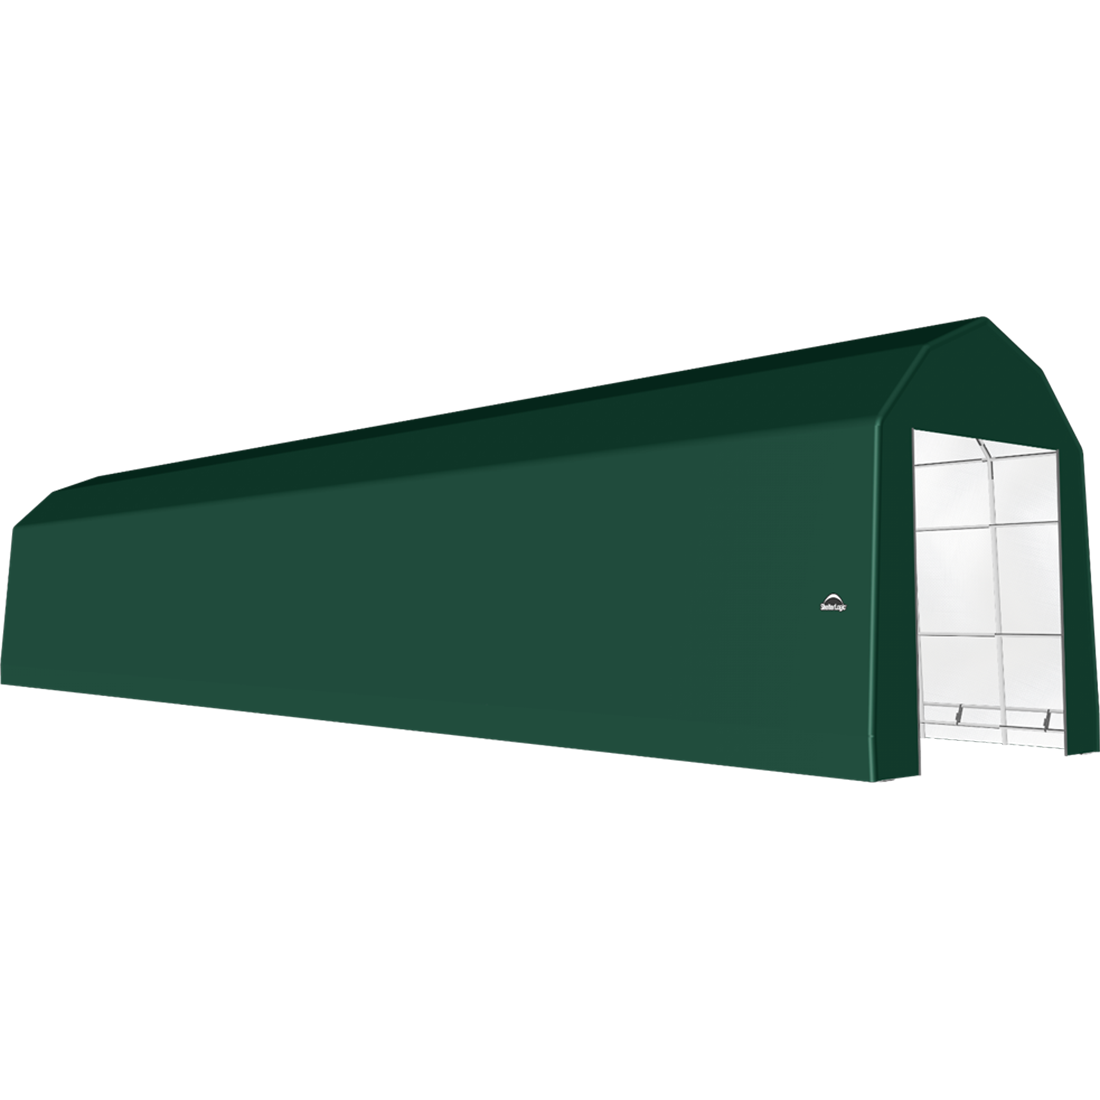 ShelterTech SP Series Barn Shelter, 15 ft. x 76 ft. x 17 ft. Heavy Duty PVC 14.5 oz. Green